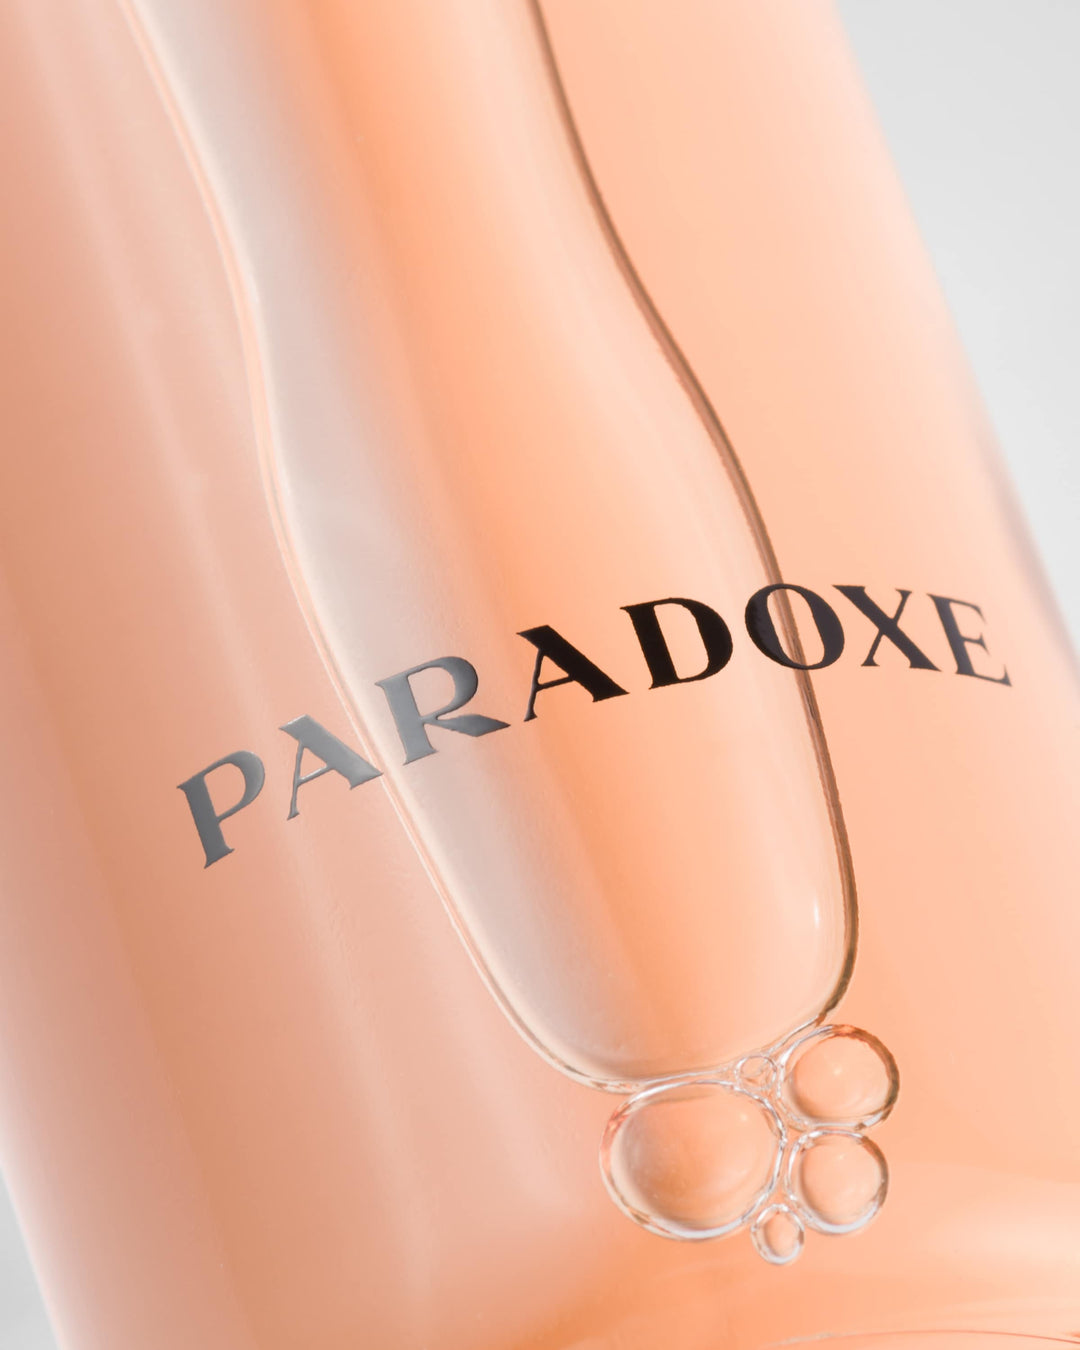 Nước Hoa PRADA Paradoxe Eau de Parfum #100 mL - Refill